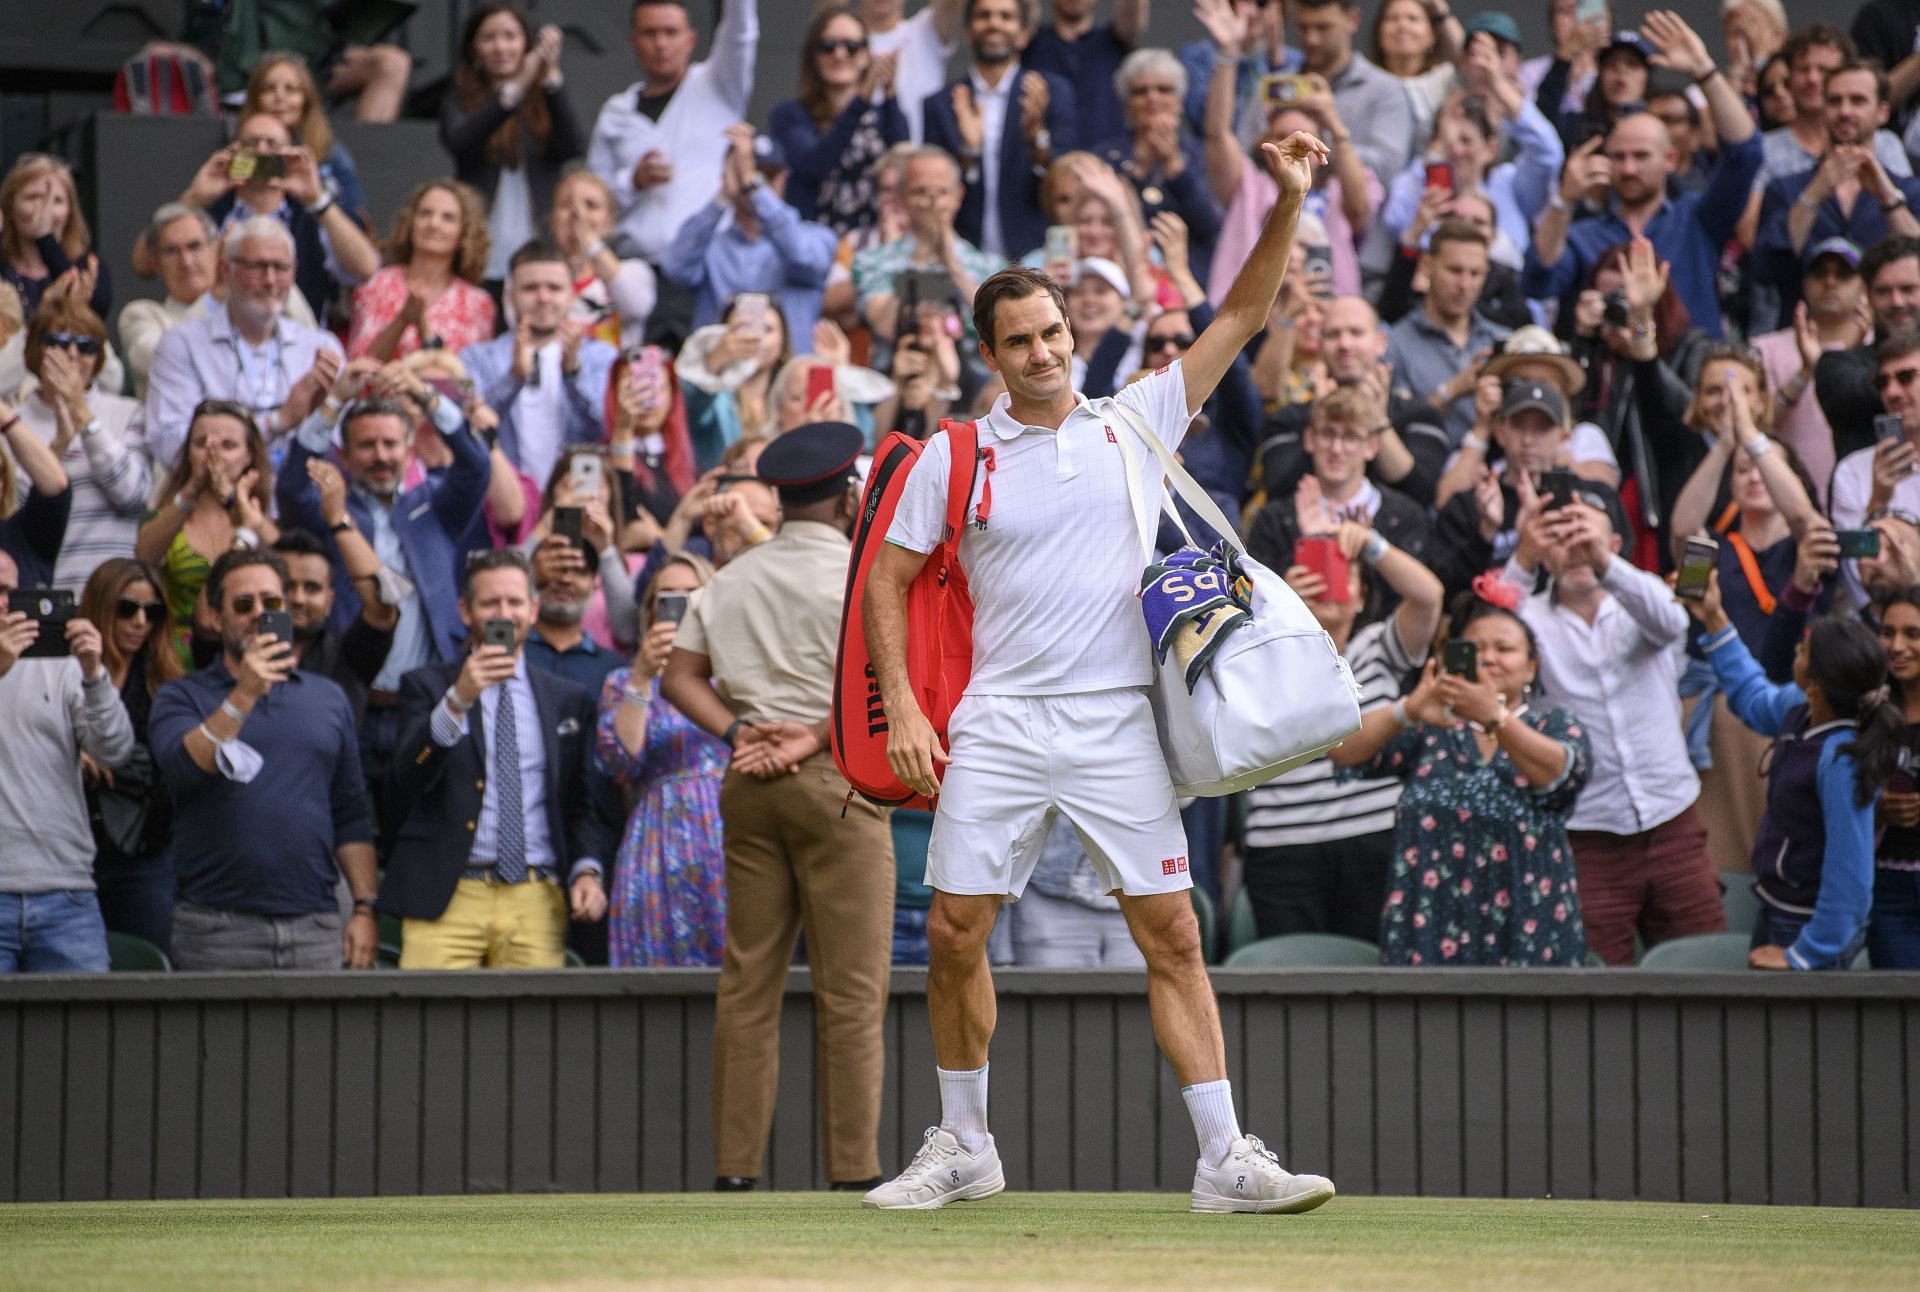 Roger Federer after his Wimbledon 2021 defeat